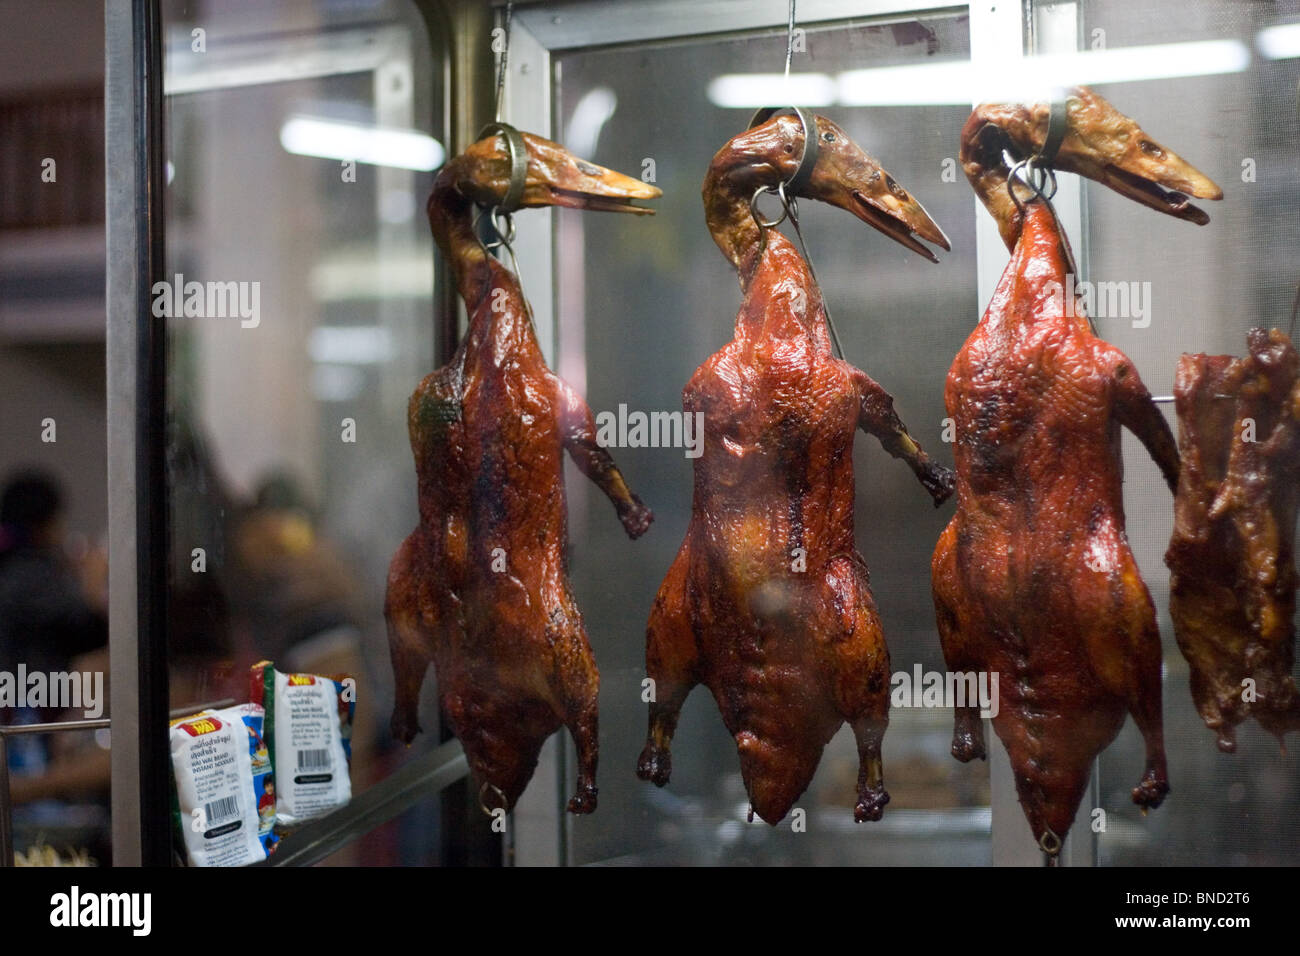 roast-duck-hanging-up-in-a-window-bangkok-thailand-BND2T6.jpg